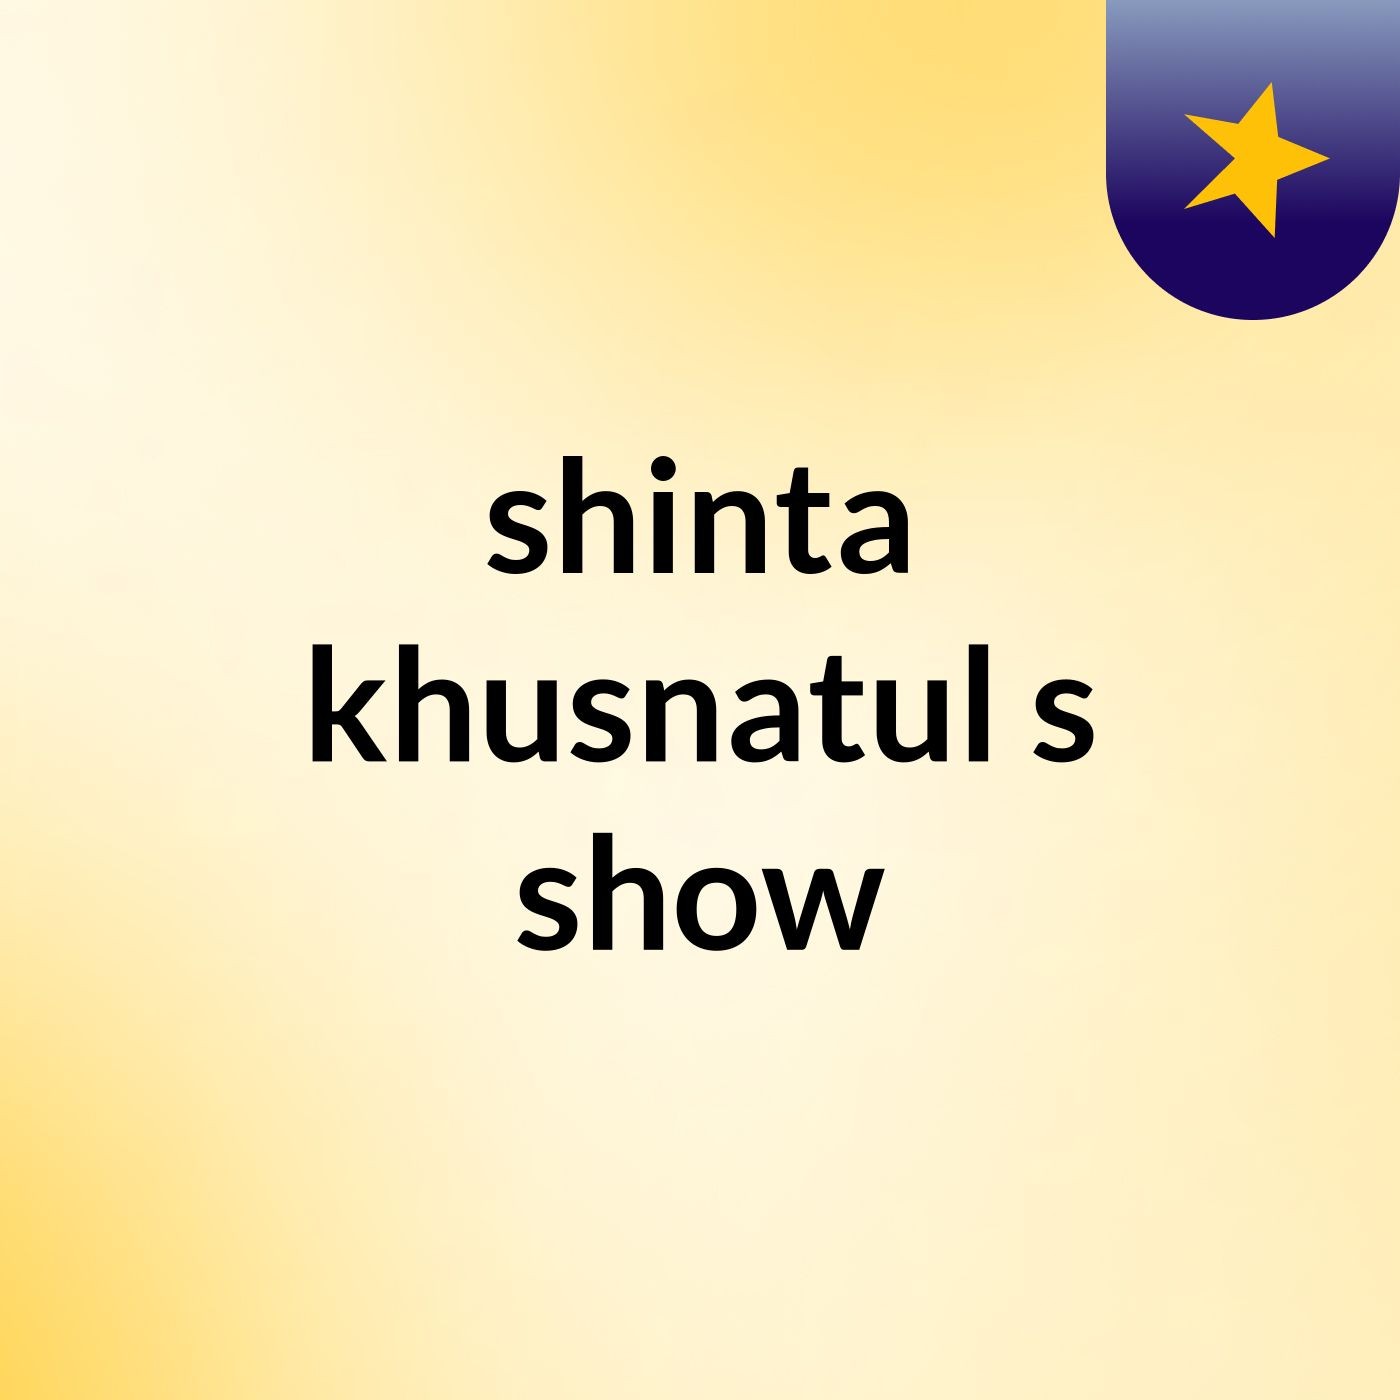 Episode 47 - shinta khusnatul's show